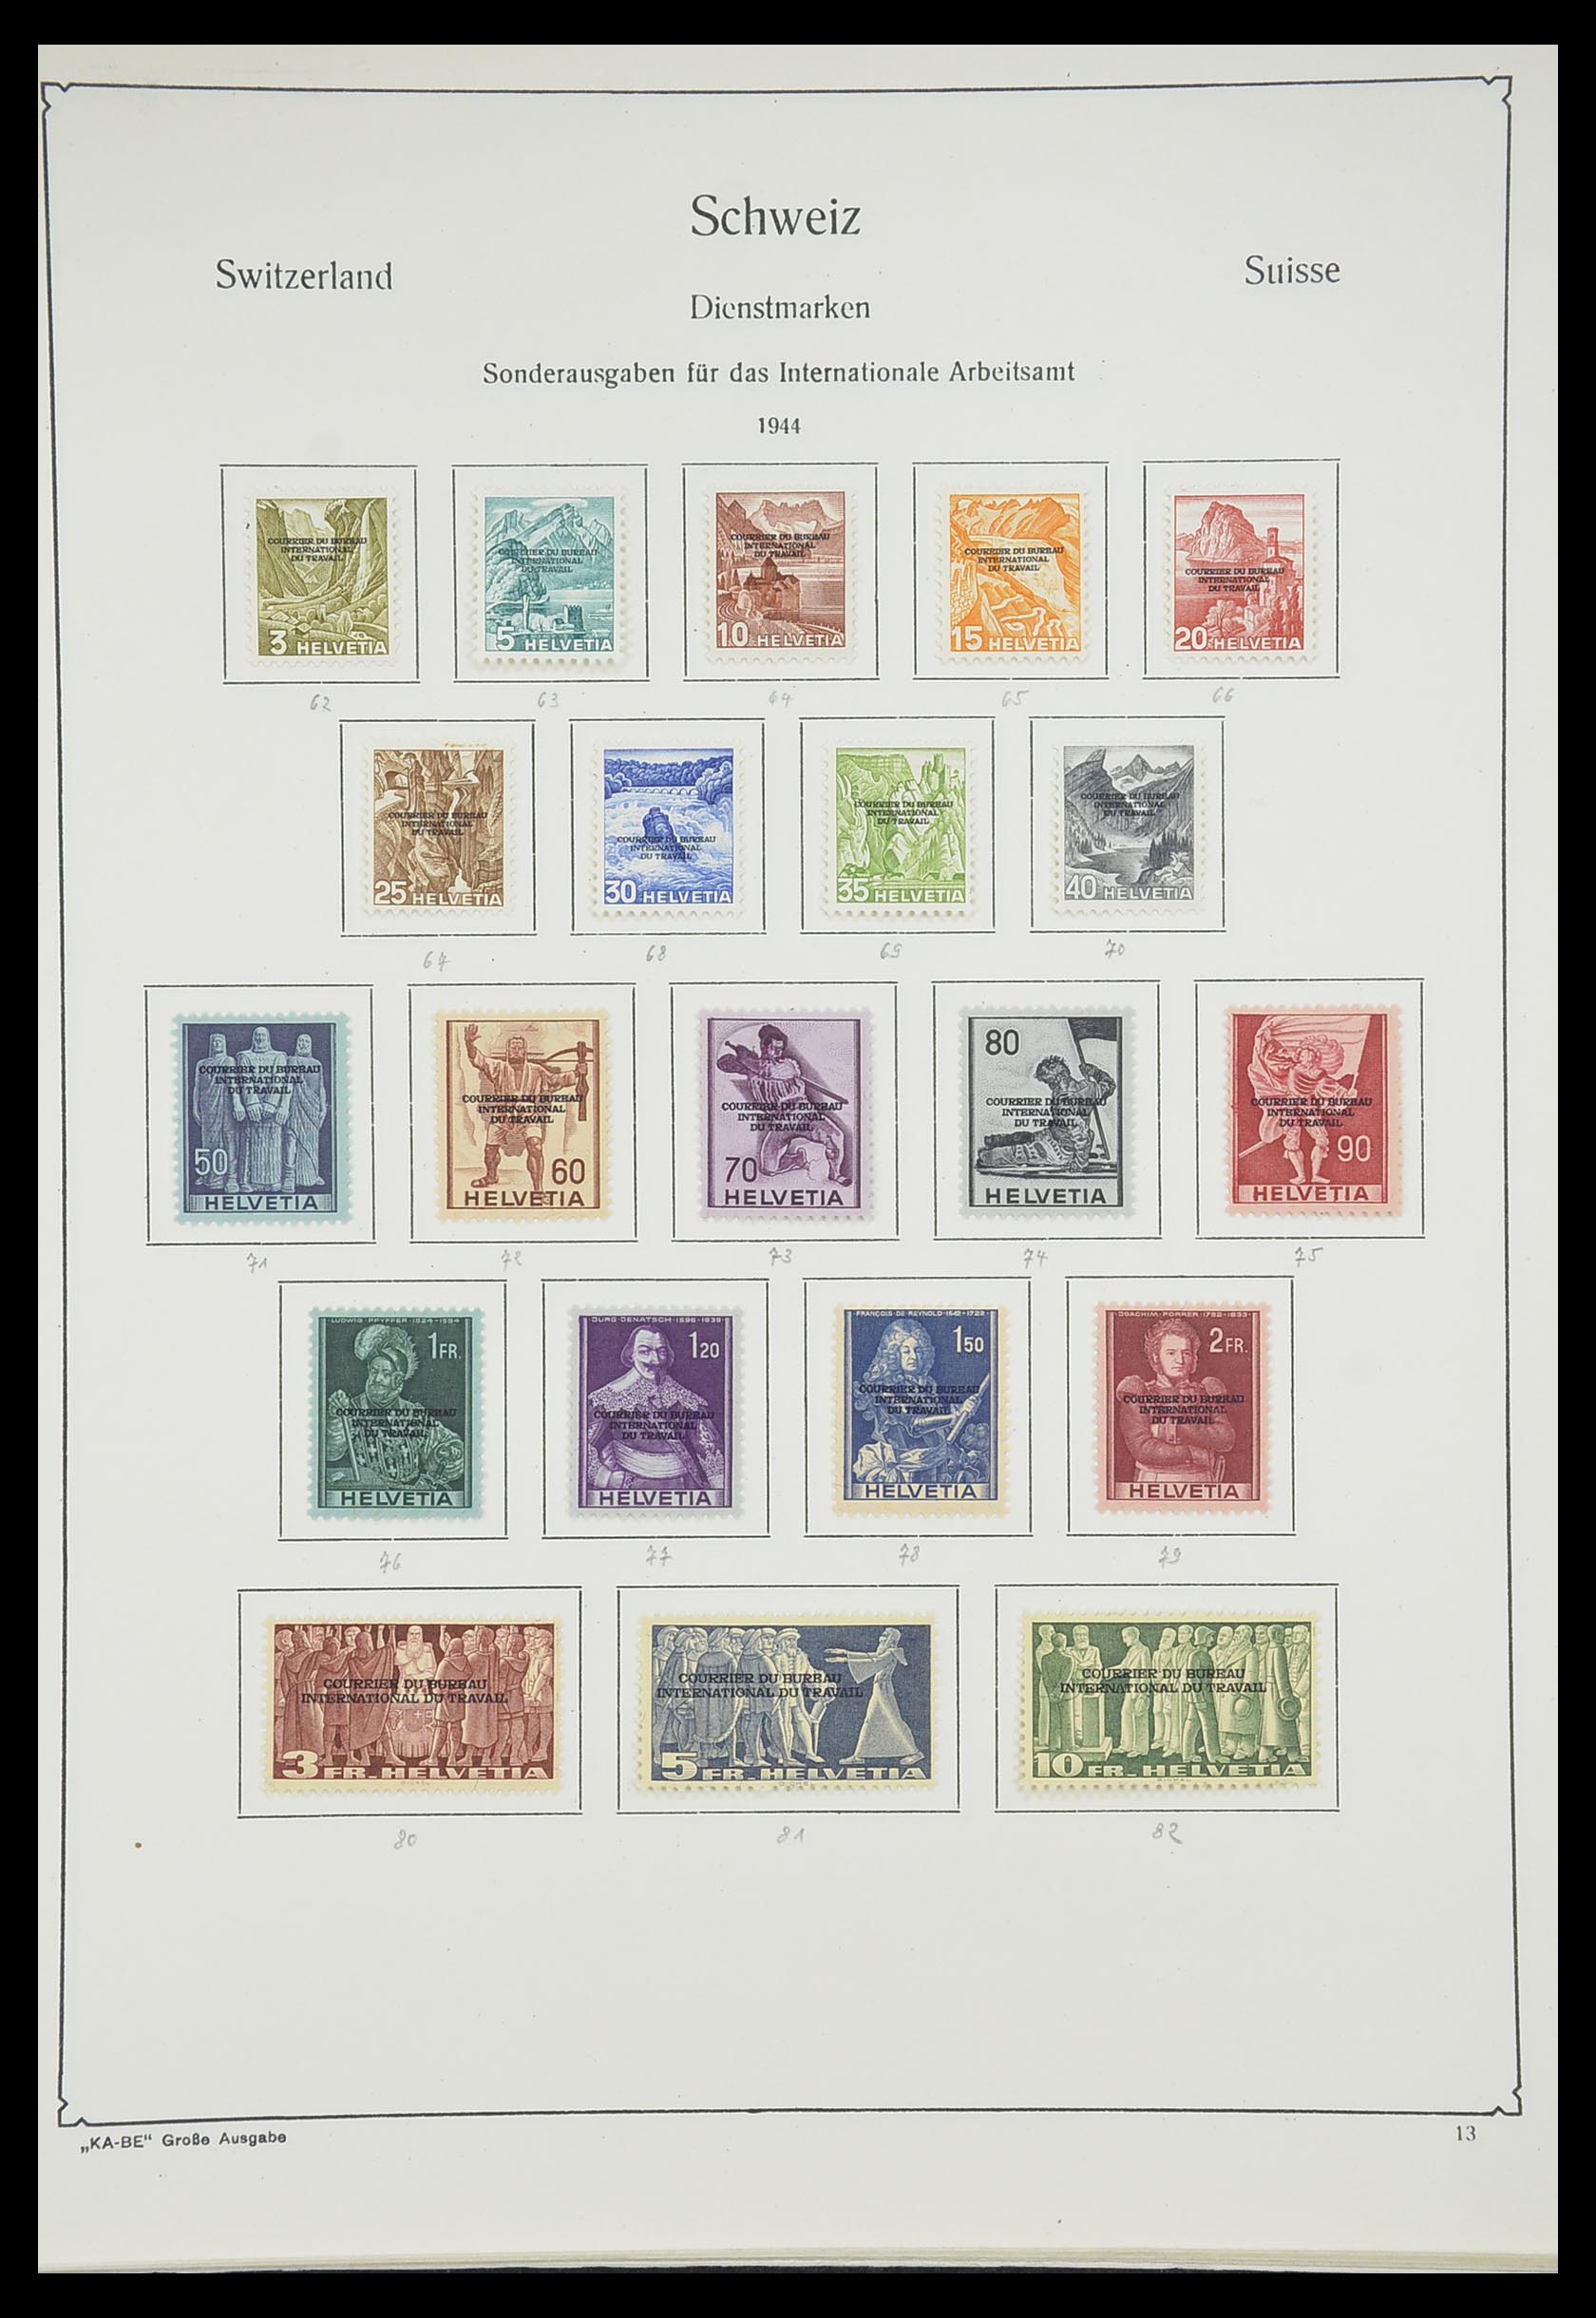 33327 014 - Stamp collection 33327 Switzerland service 1922-1989.